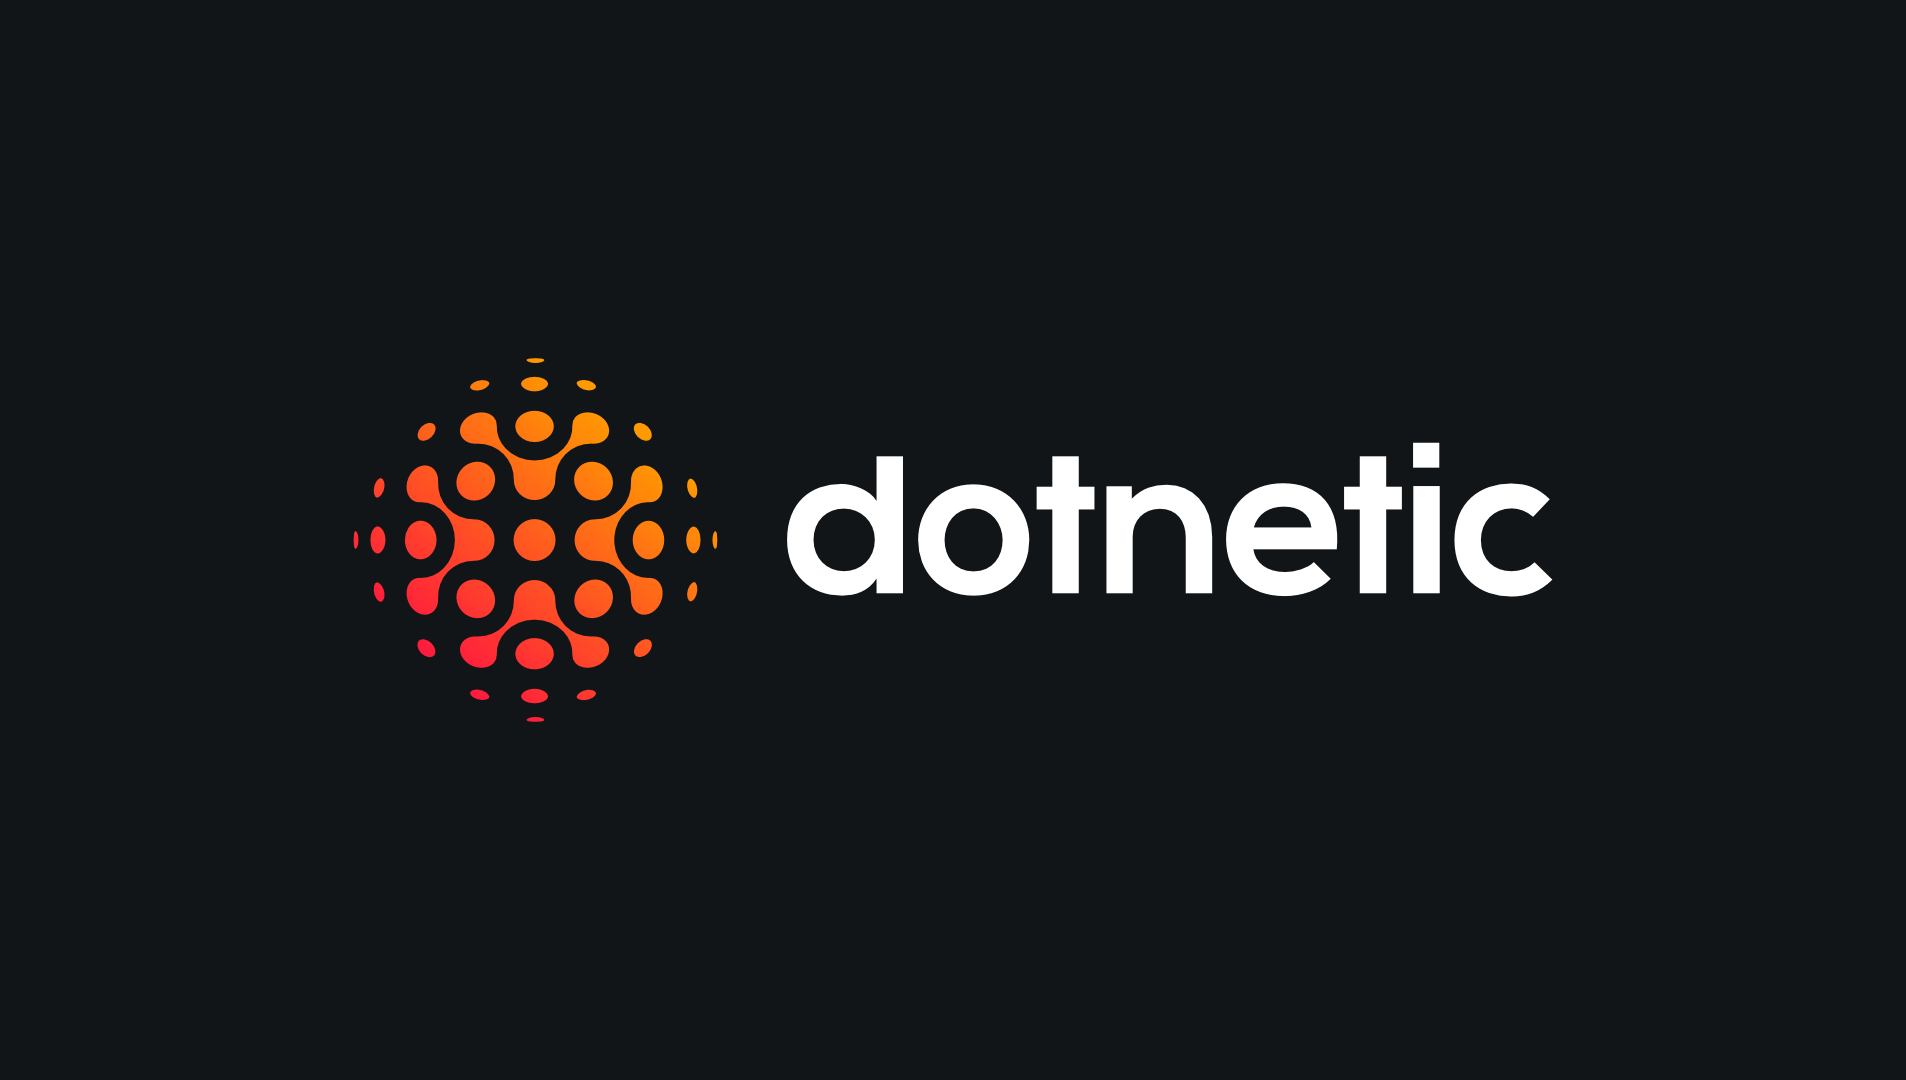 dotnetic - Neuer Name, neue Gesellschaft, neue Website